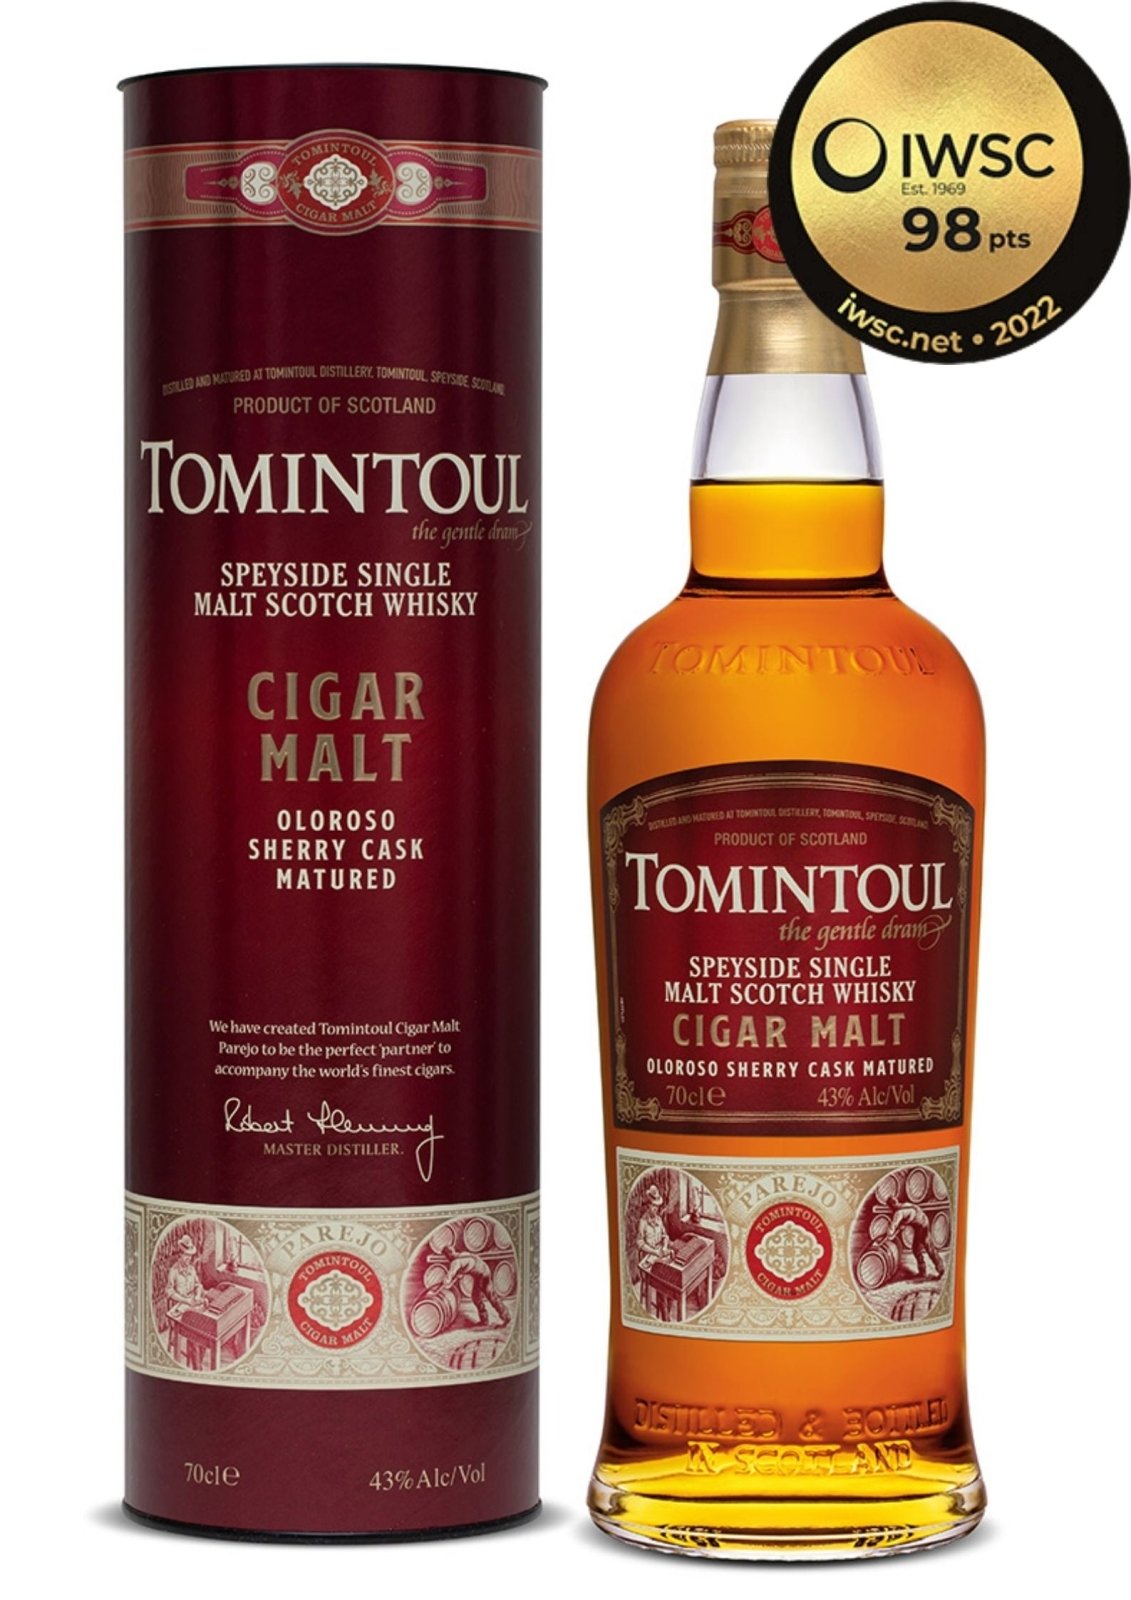 Bottle of Tomintoul Cigar Malt Speyside Single Malt Whisky, 43%